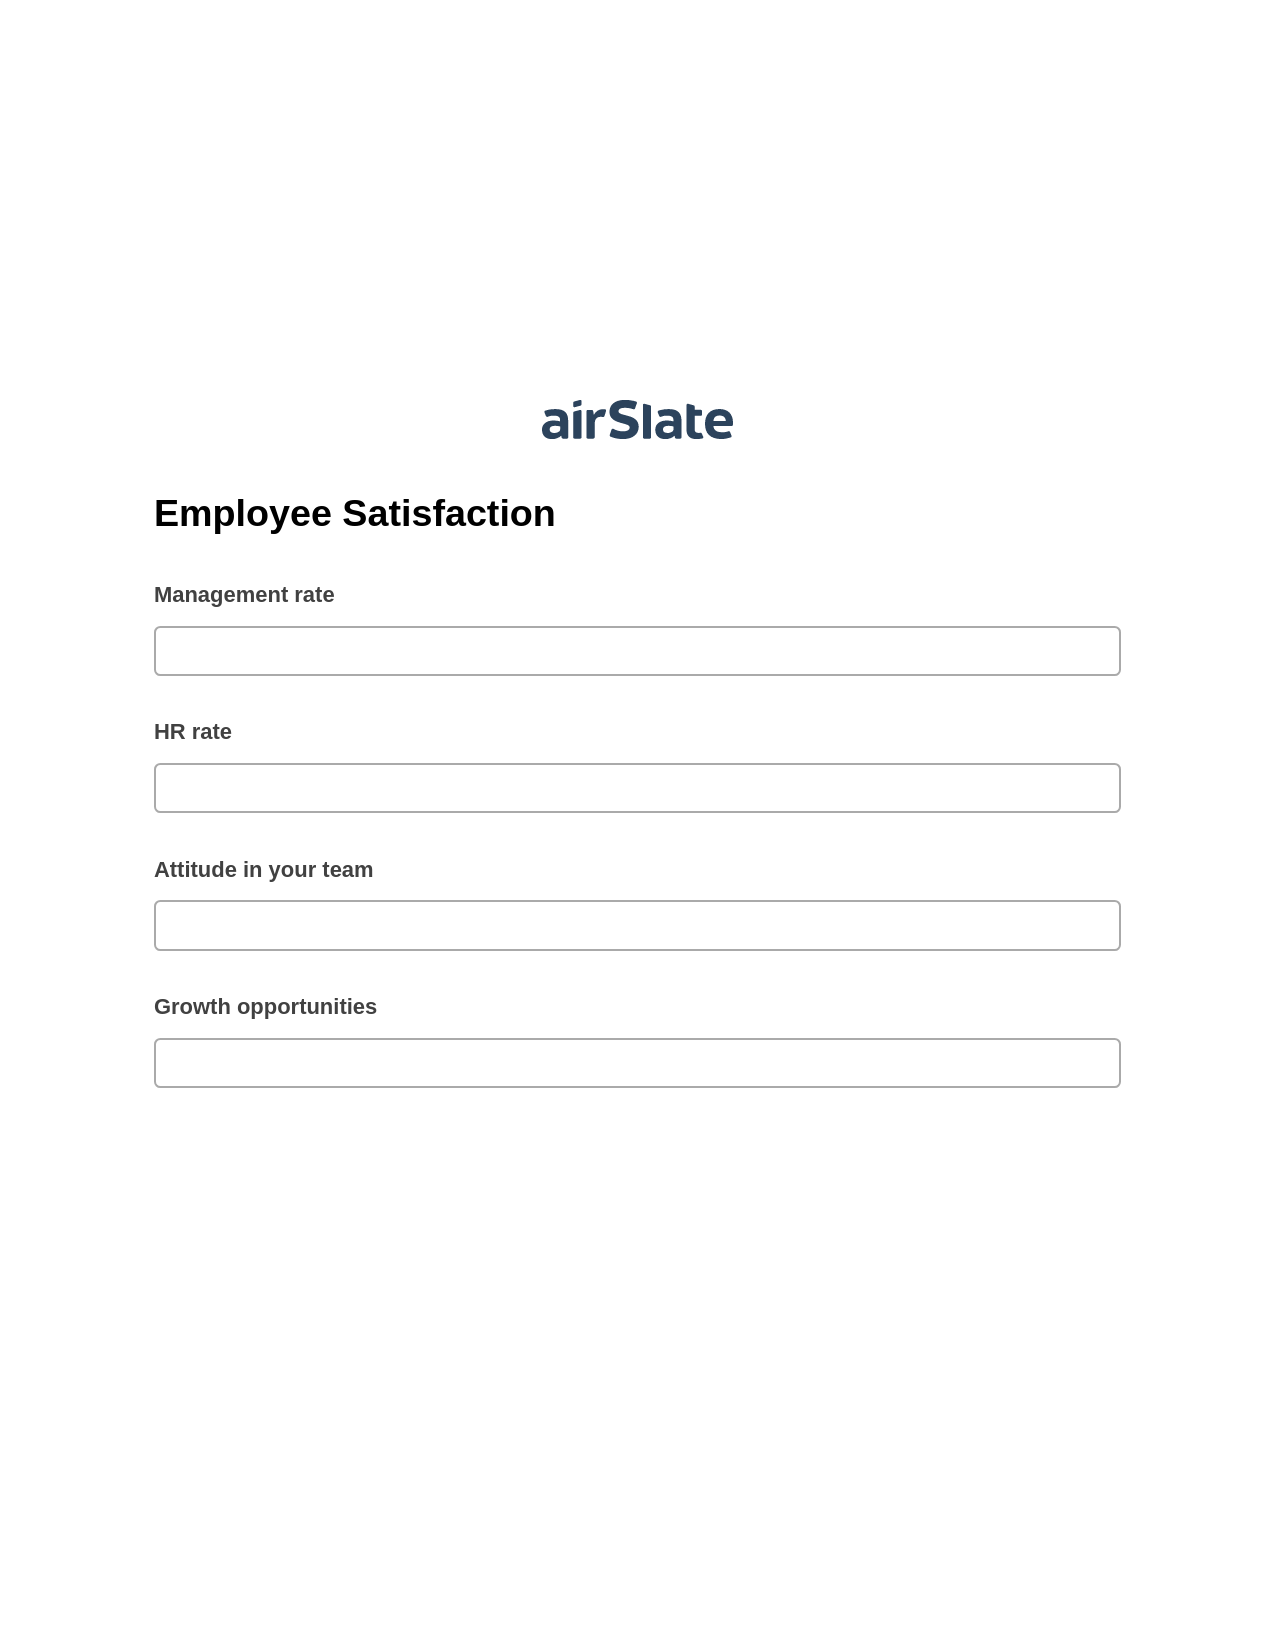 Employee Satisfaction Pre-fill from Litmos bot, Lock the slate bot, Slack Notification Postfinish Bot